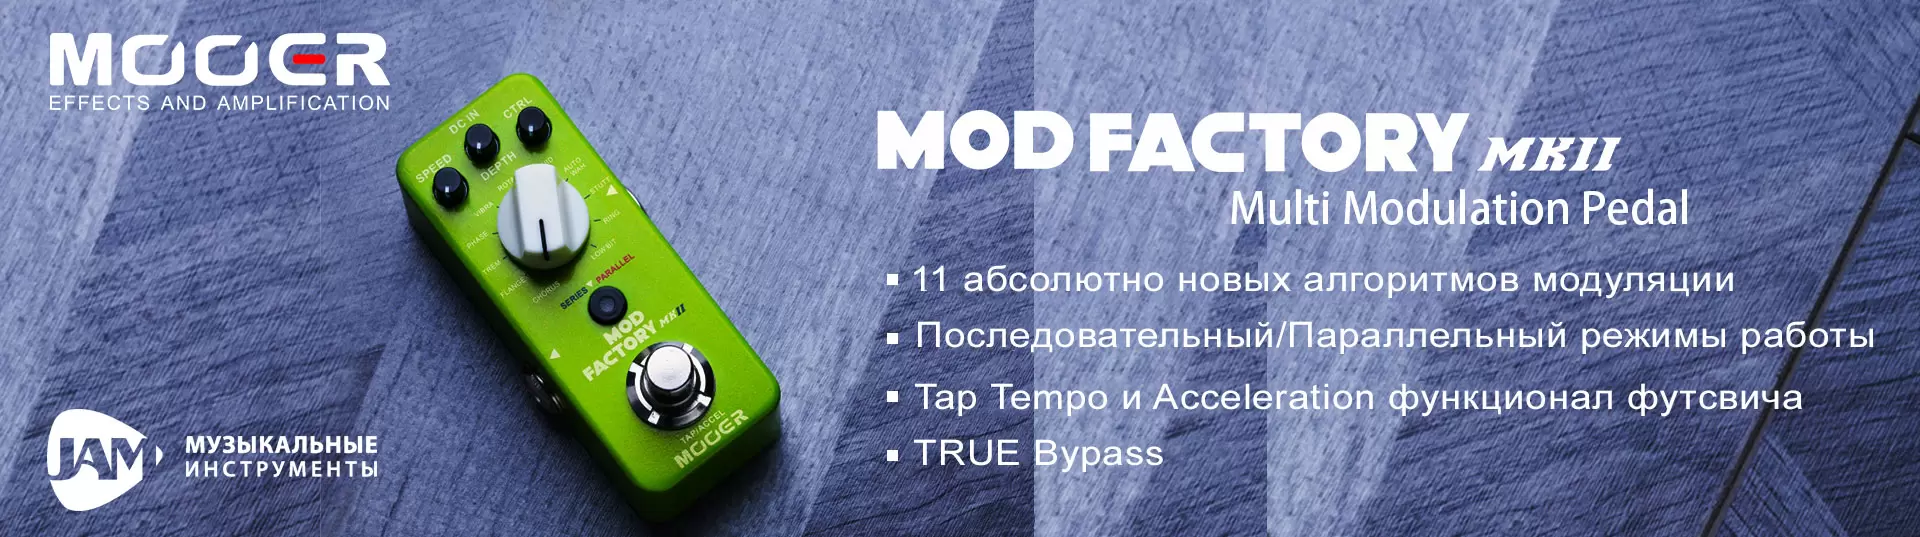 Mooer Mod Factory MKII - PROSHOW.COM.UA